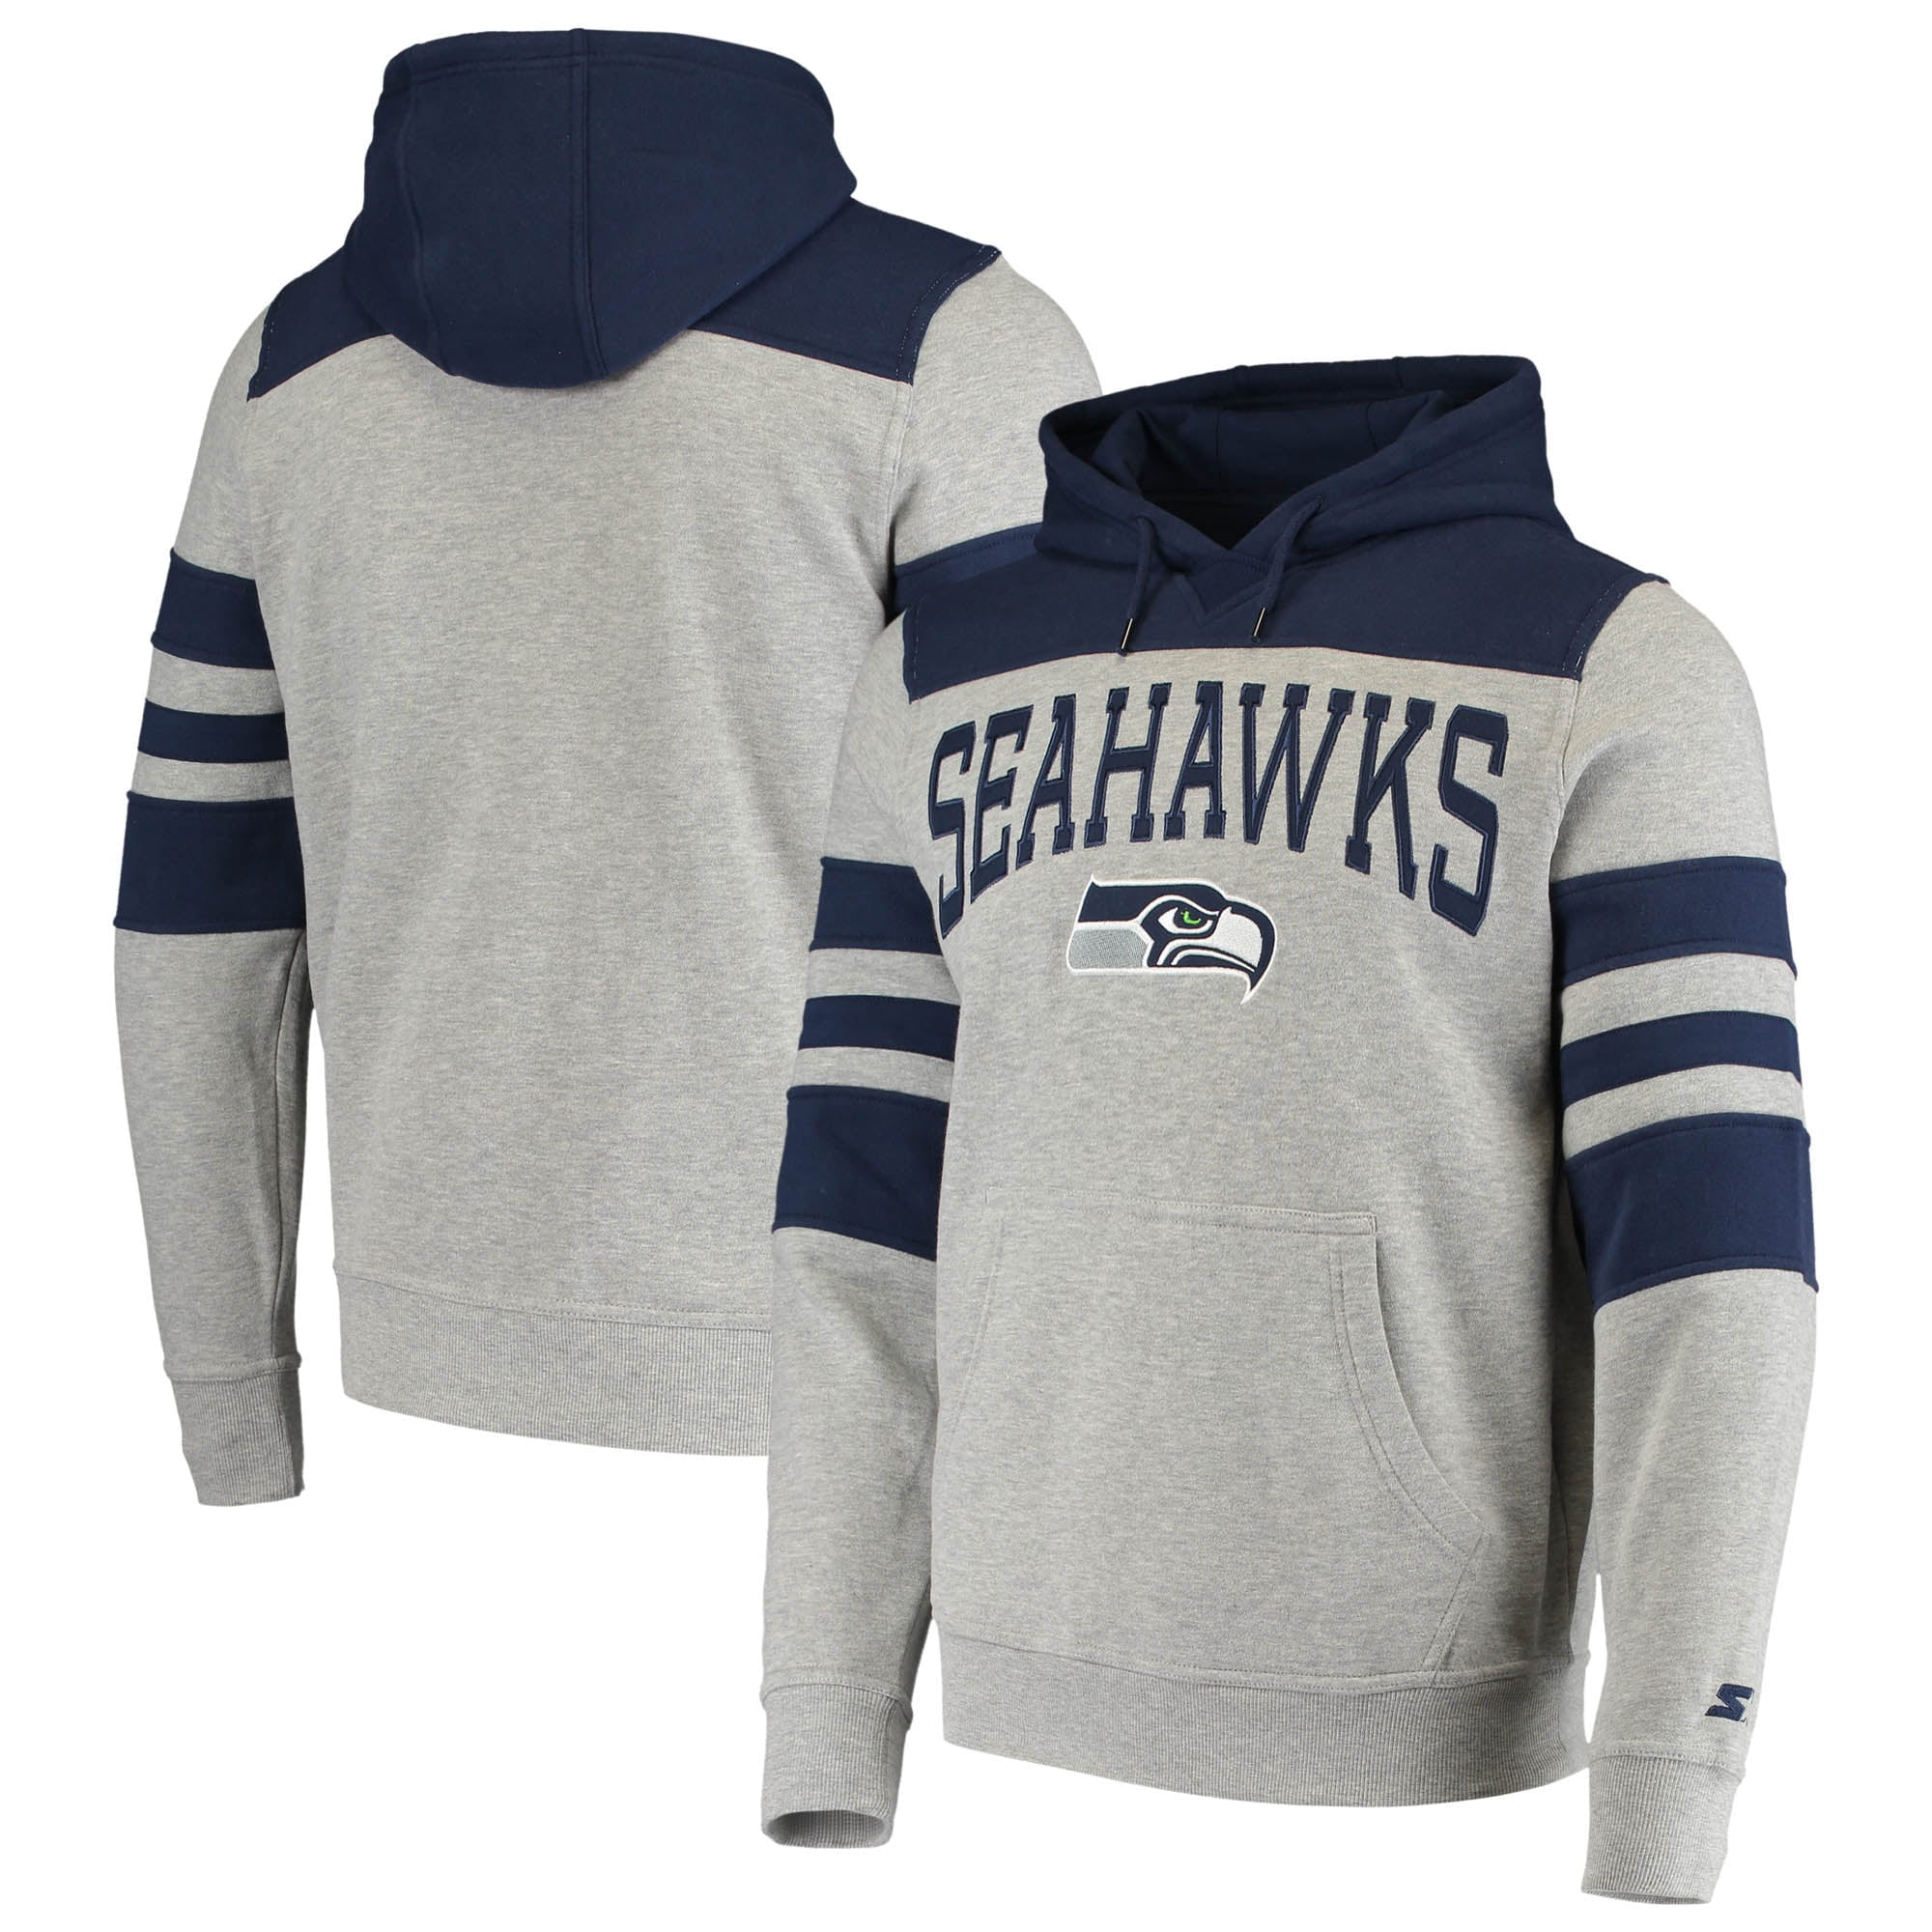 grey seahawks sweatshirt